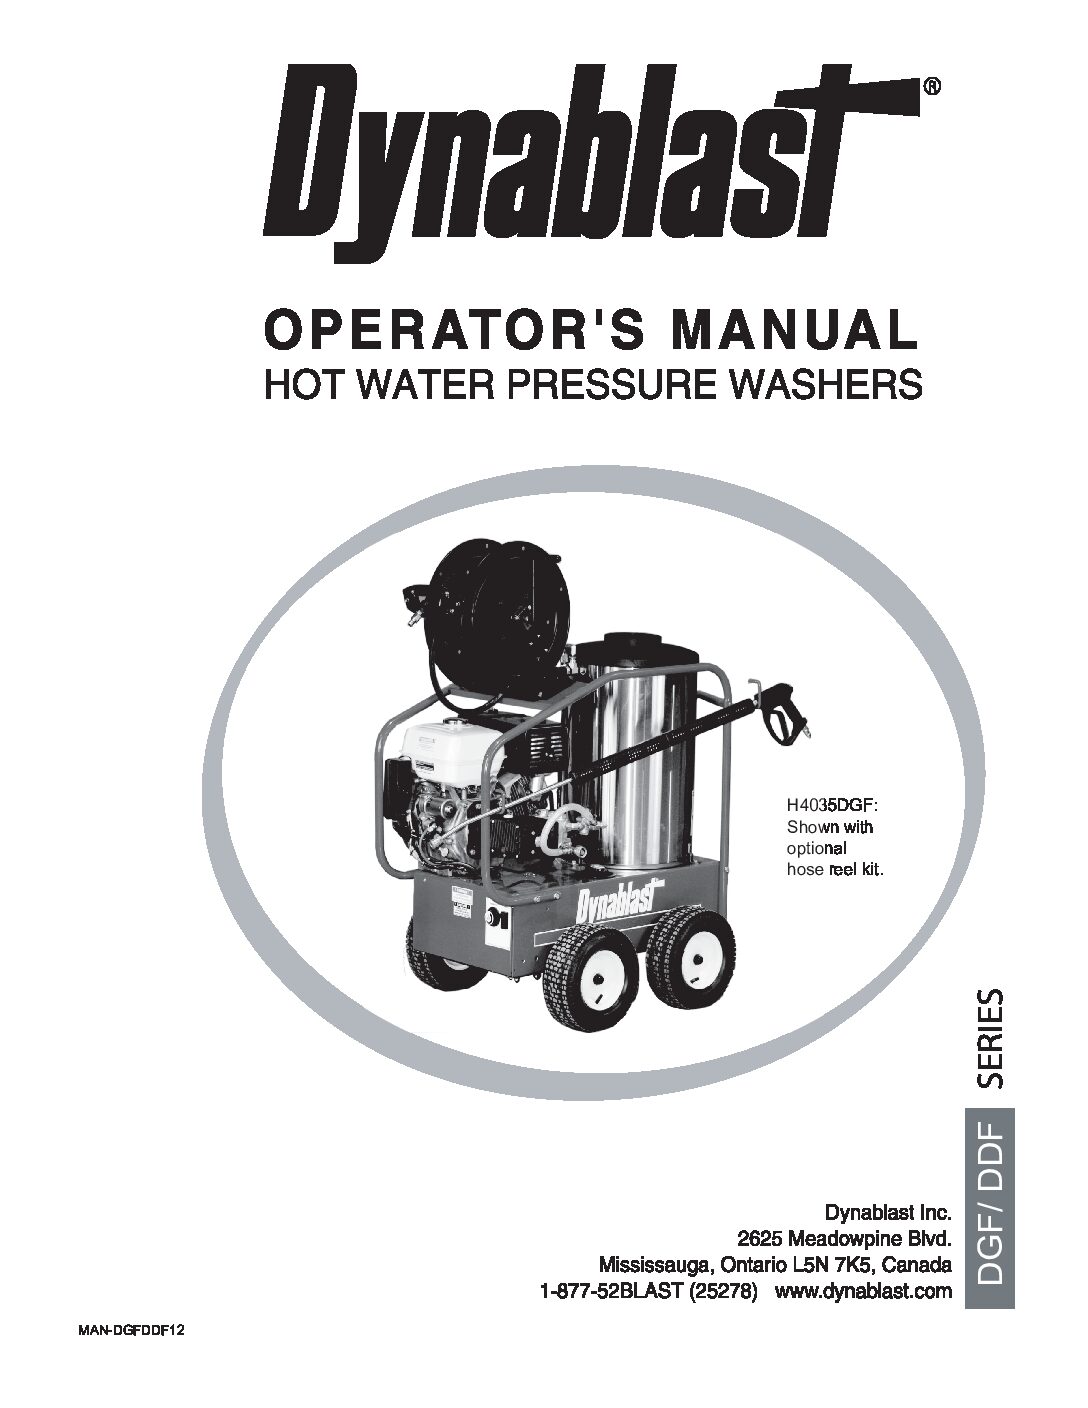 Dynablast HS4035DGFS Hot Water Pressure Washer manual English